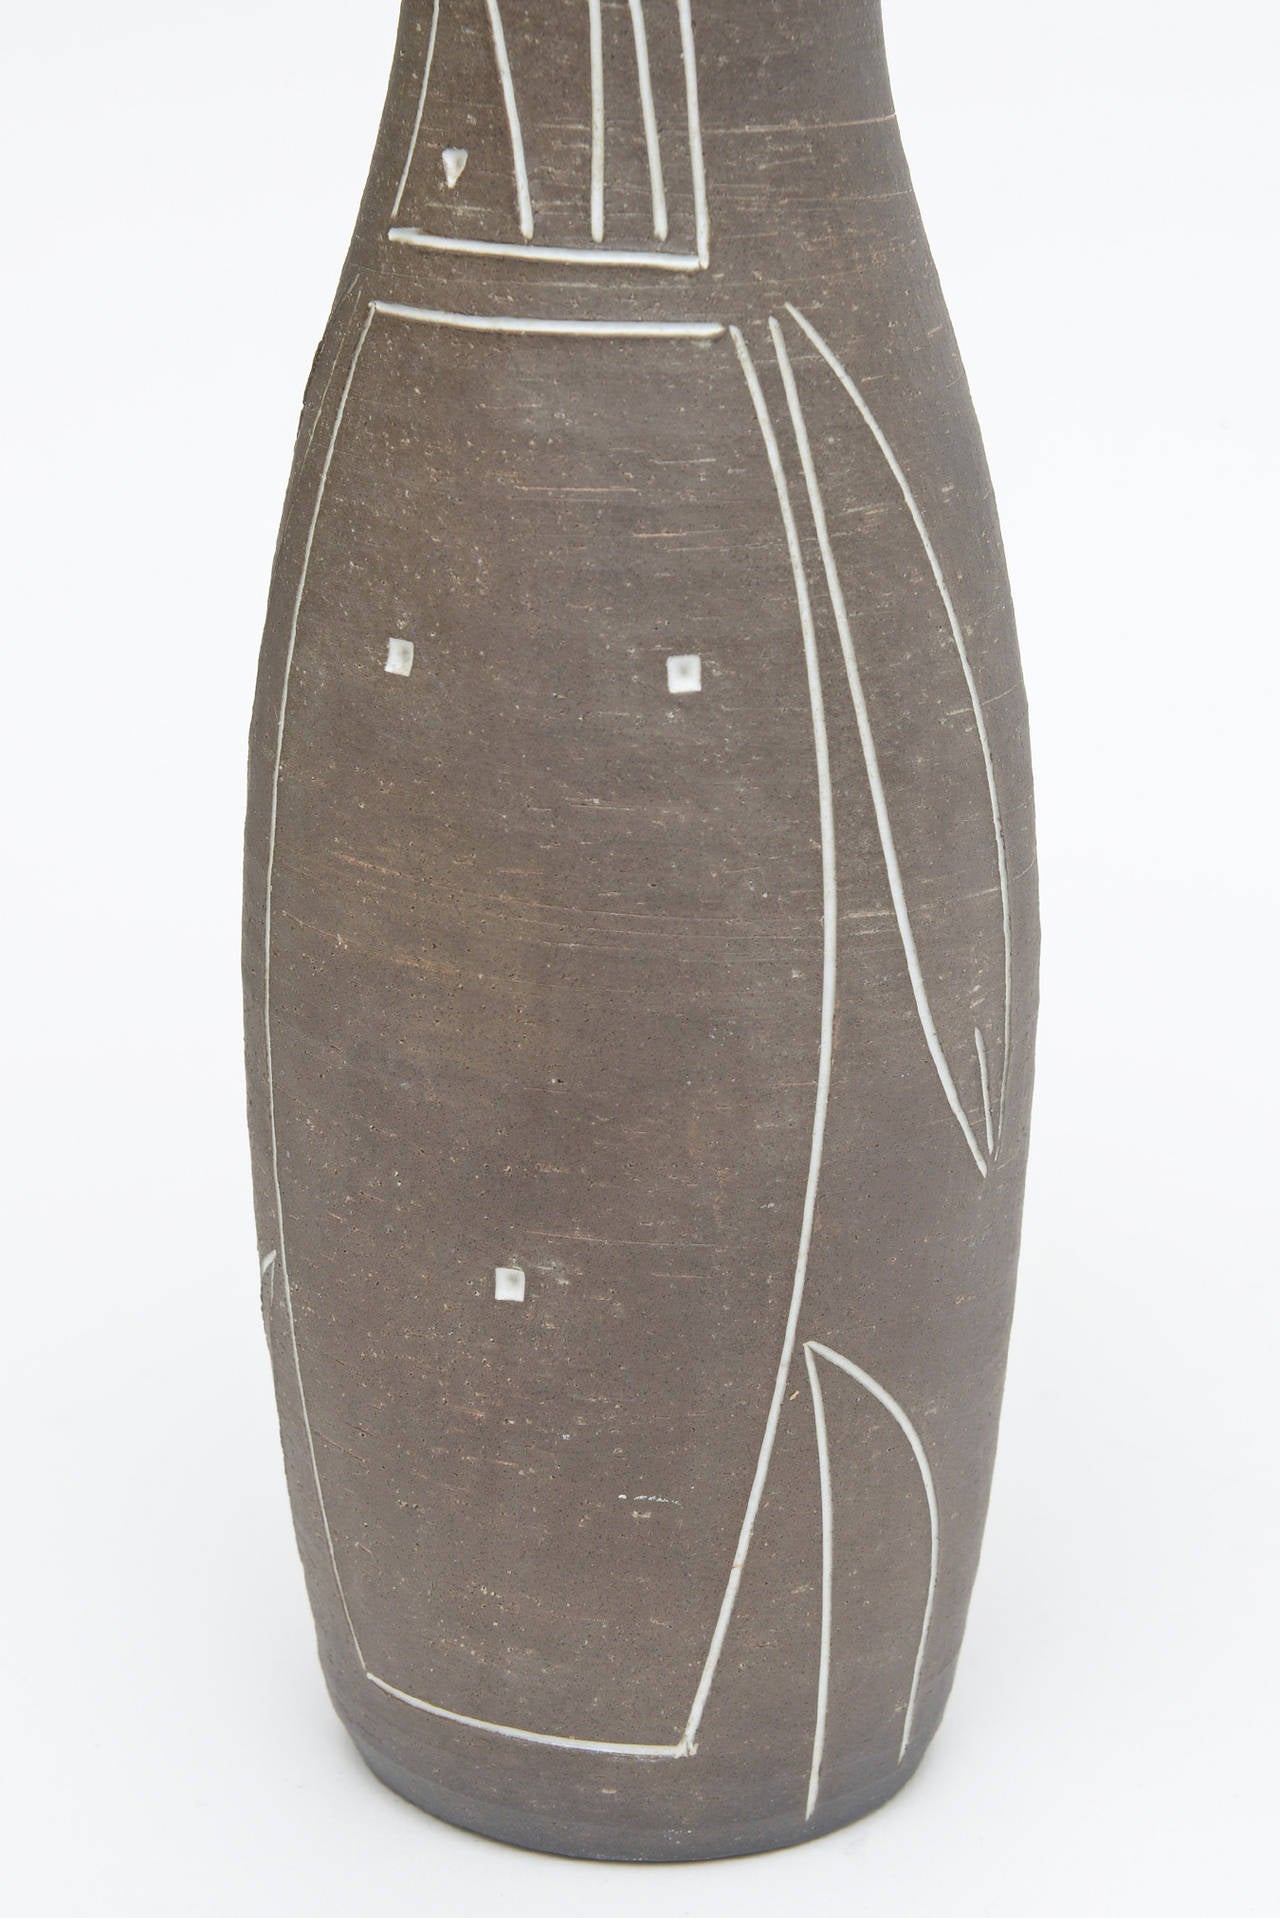 French Miro Inspired Mid-Century Ceramic Vase or Vessel Sculpture 2